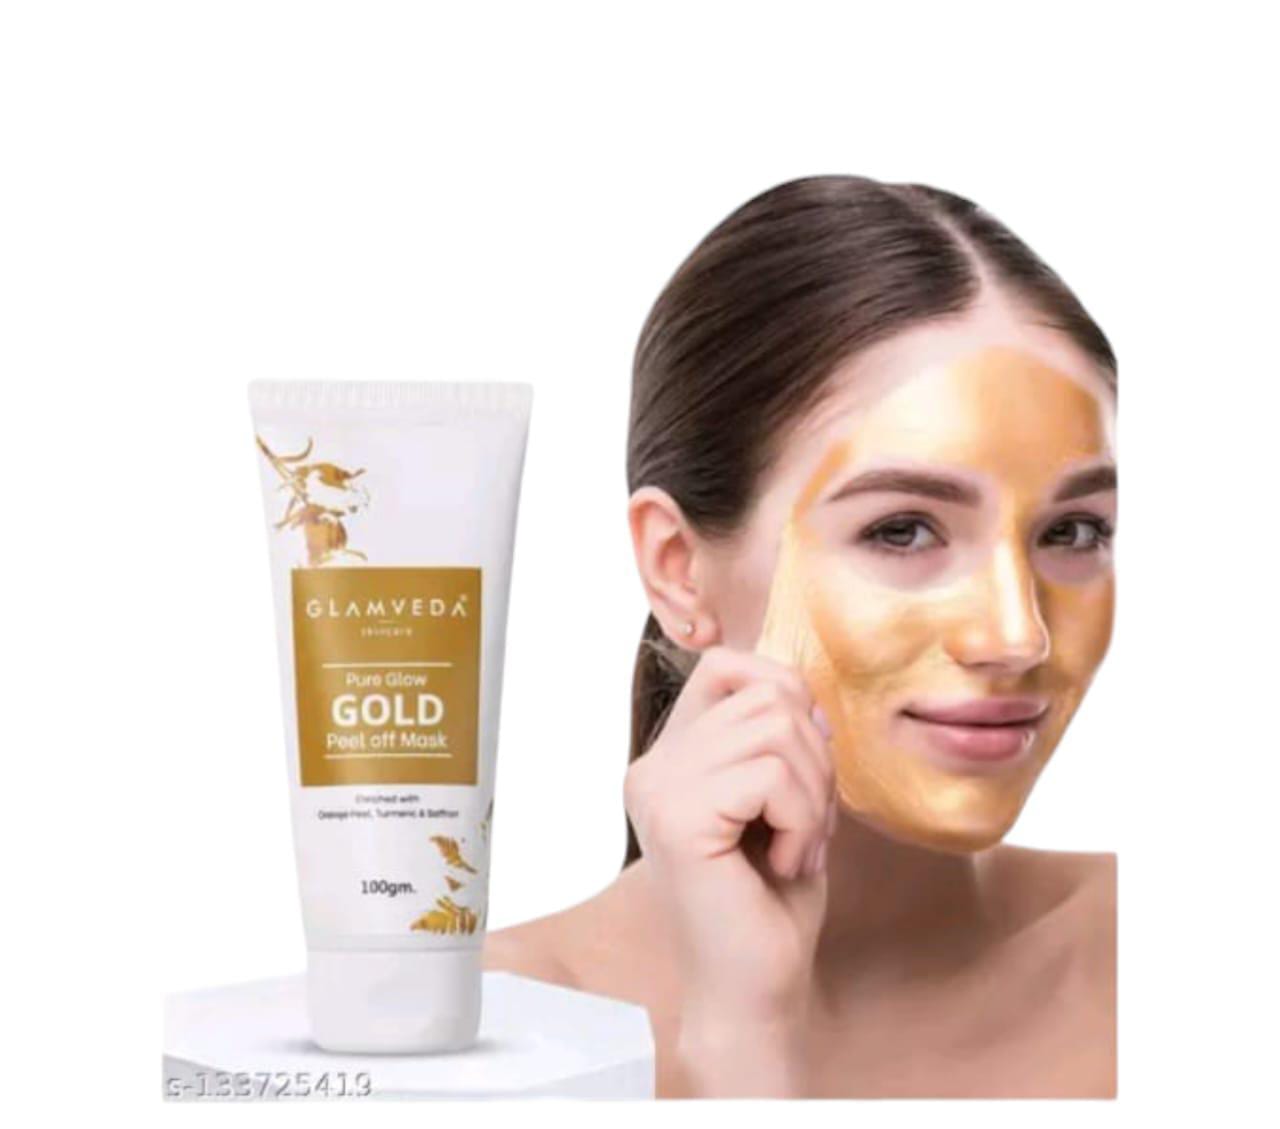 Glamveda Pure Glow Gold Peel Mask